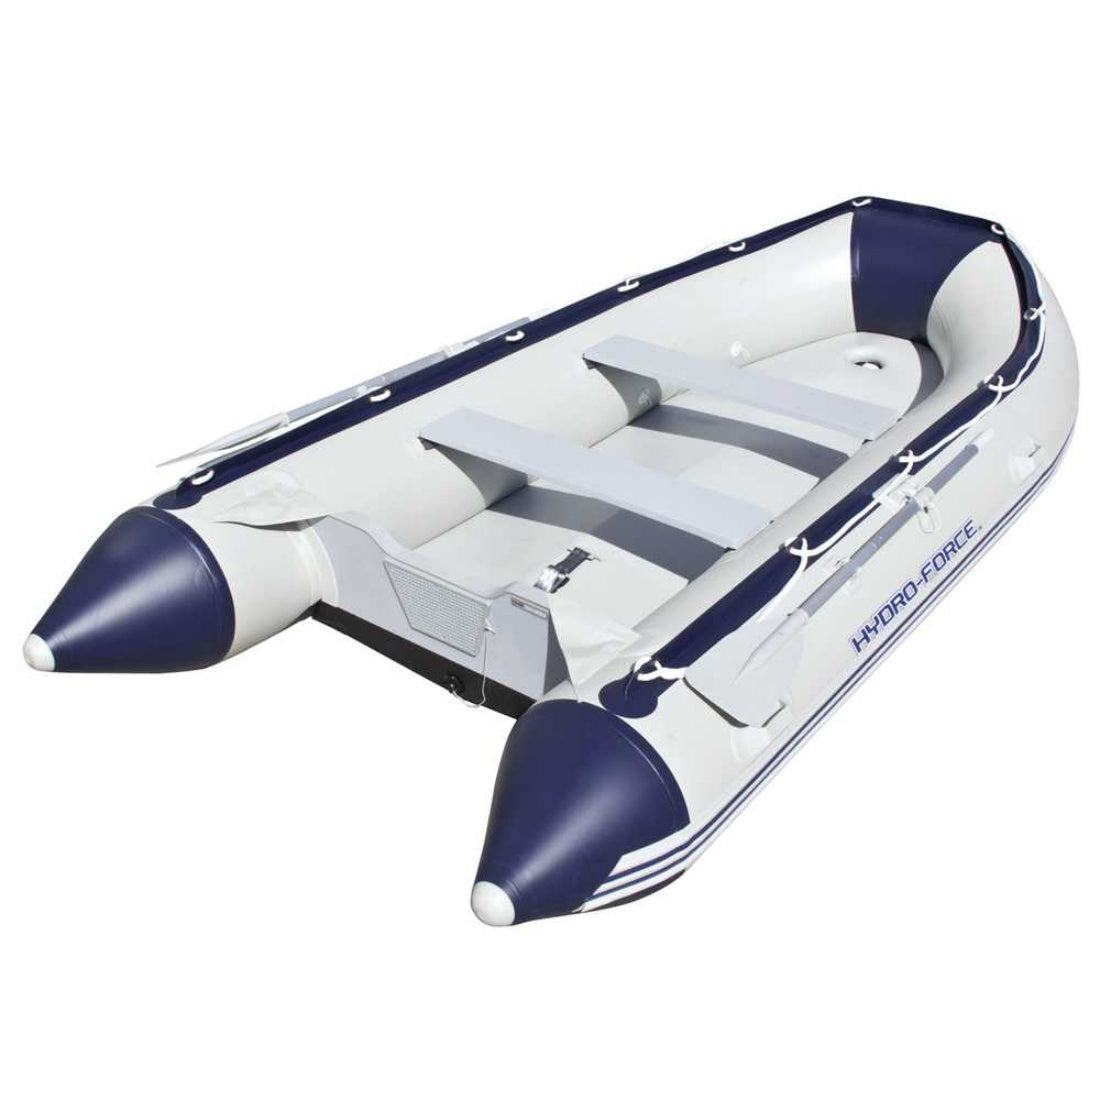 Bestway 3.8m Hydro-Force Marine-Grade Inflatable Fishing Boat w/ Aluminium Oars